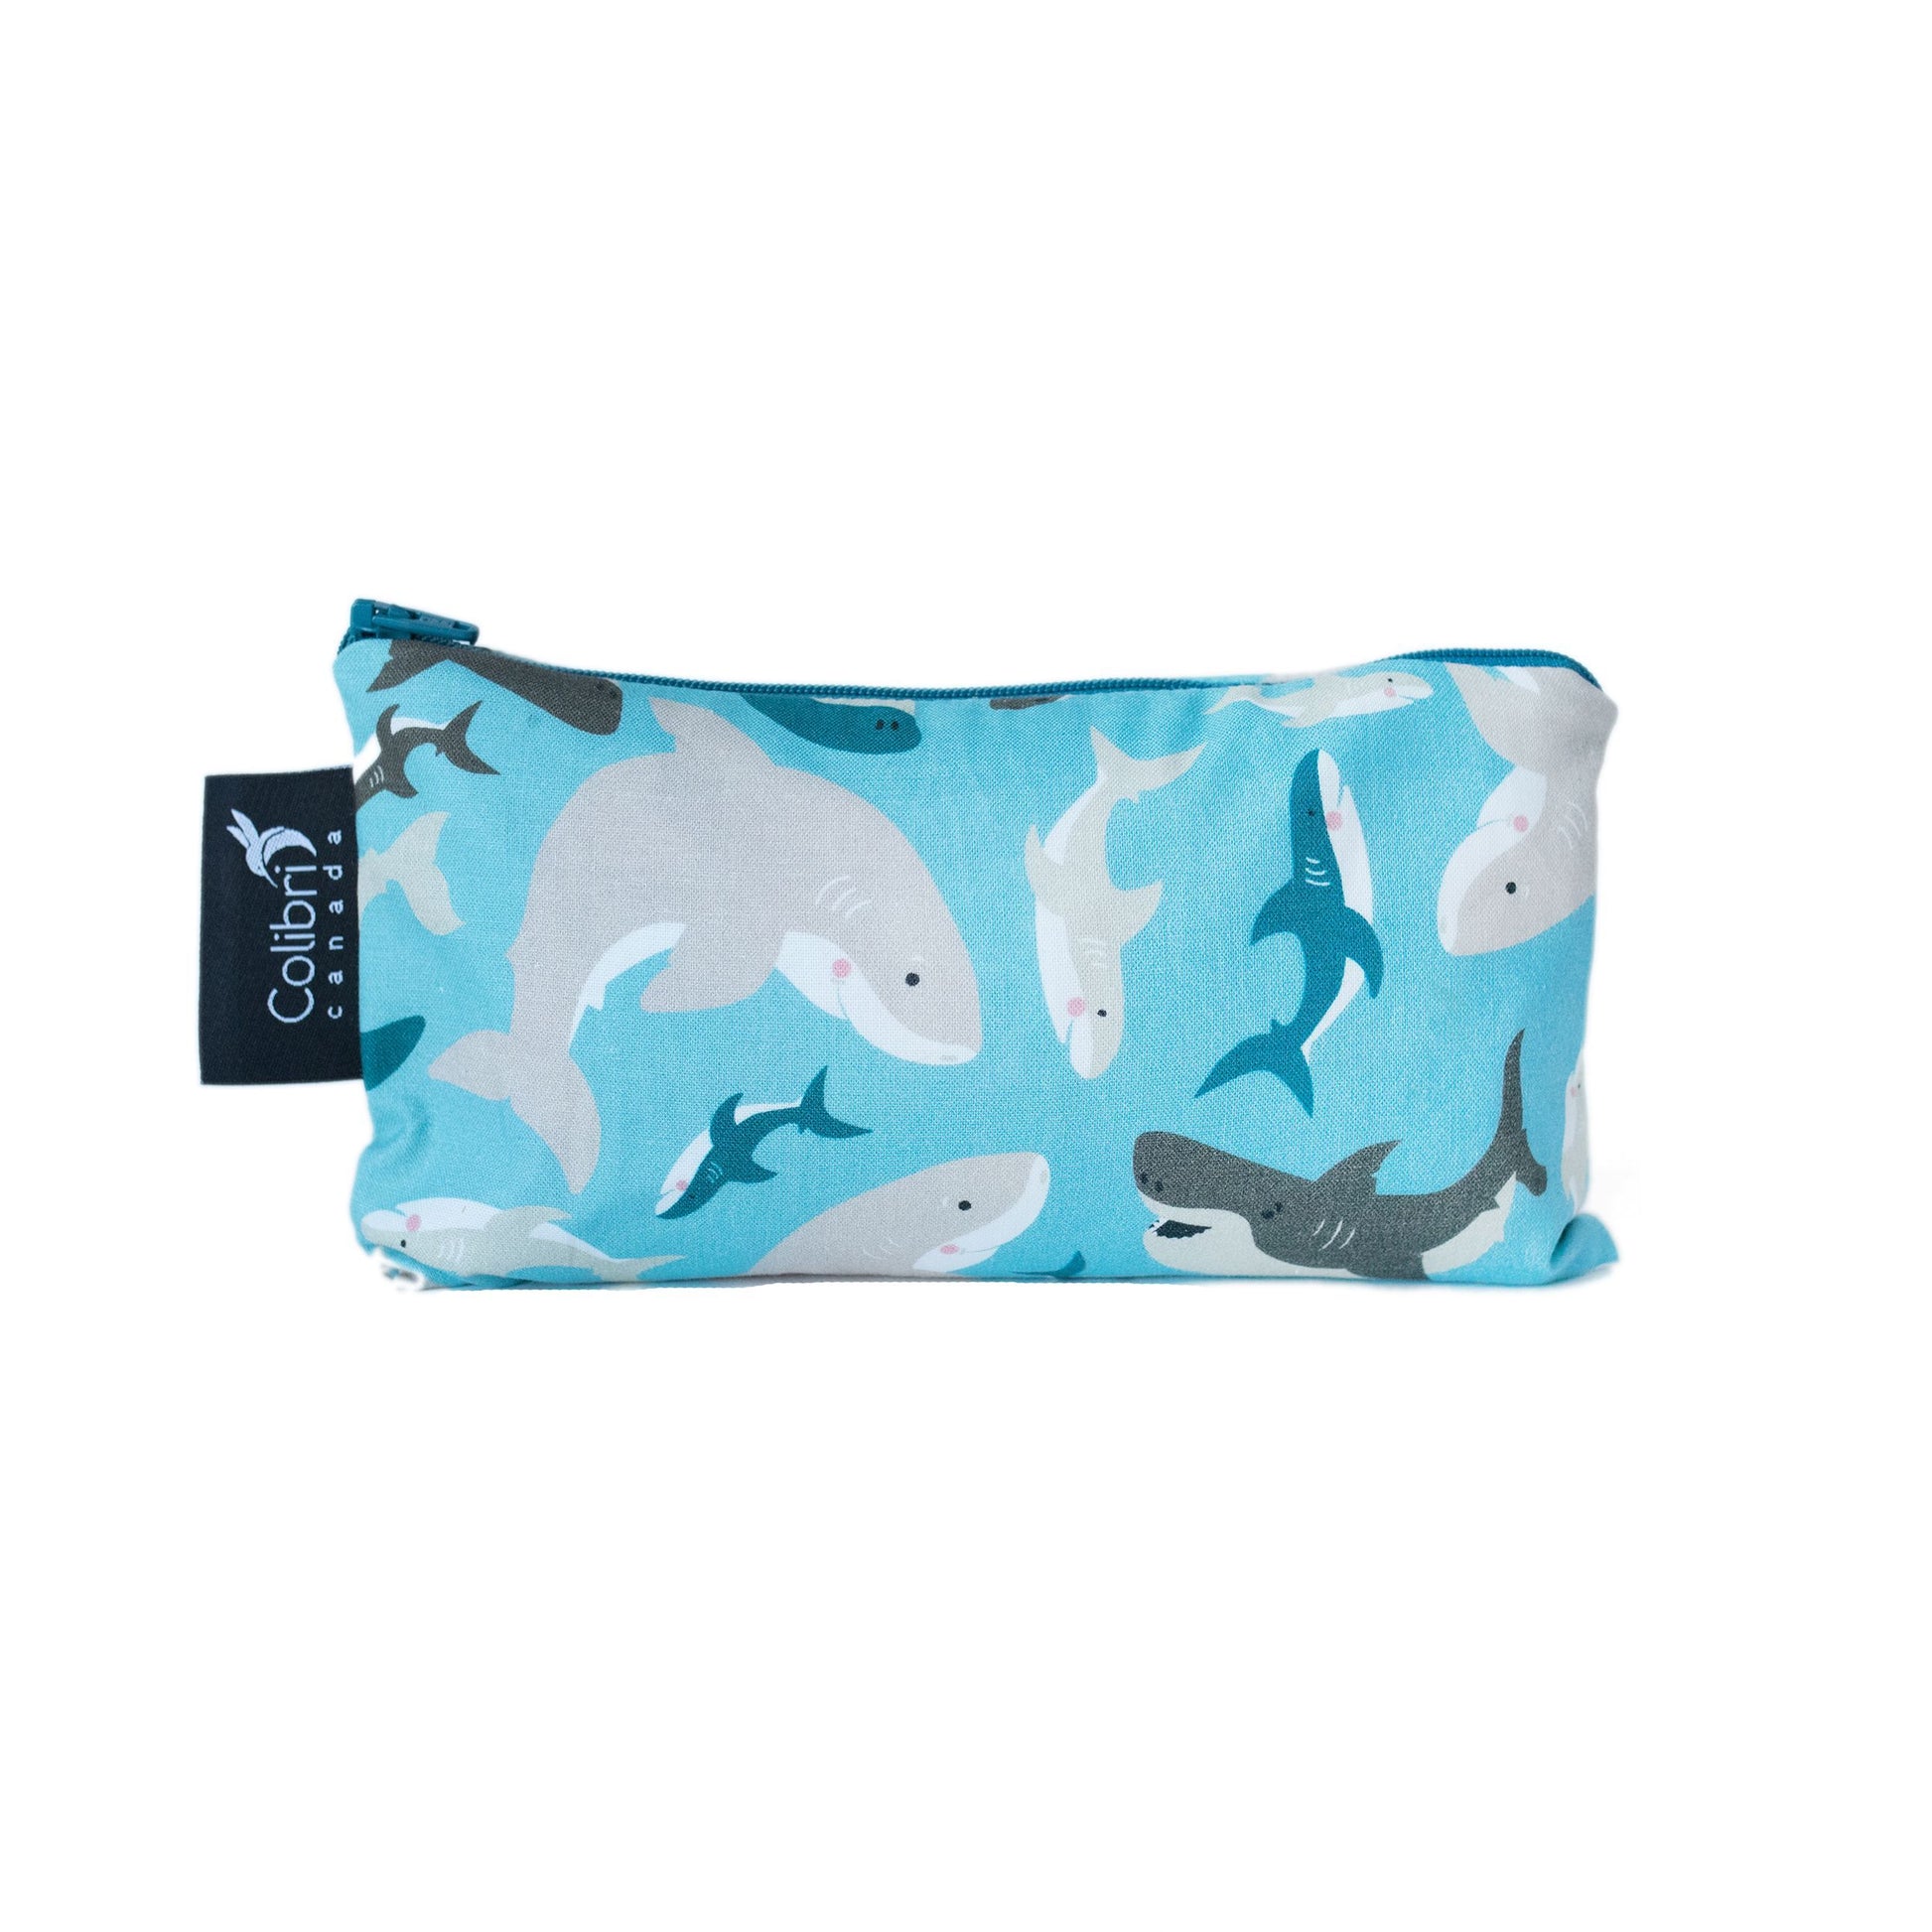 Purse Wetbags - Colibri Sharks One Pocket Medium Wet Bag